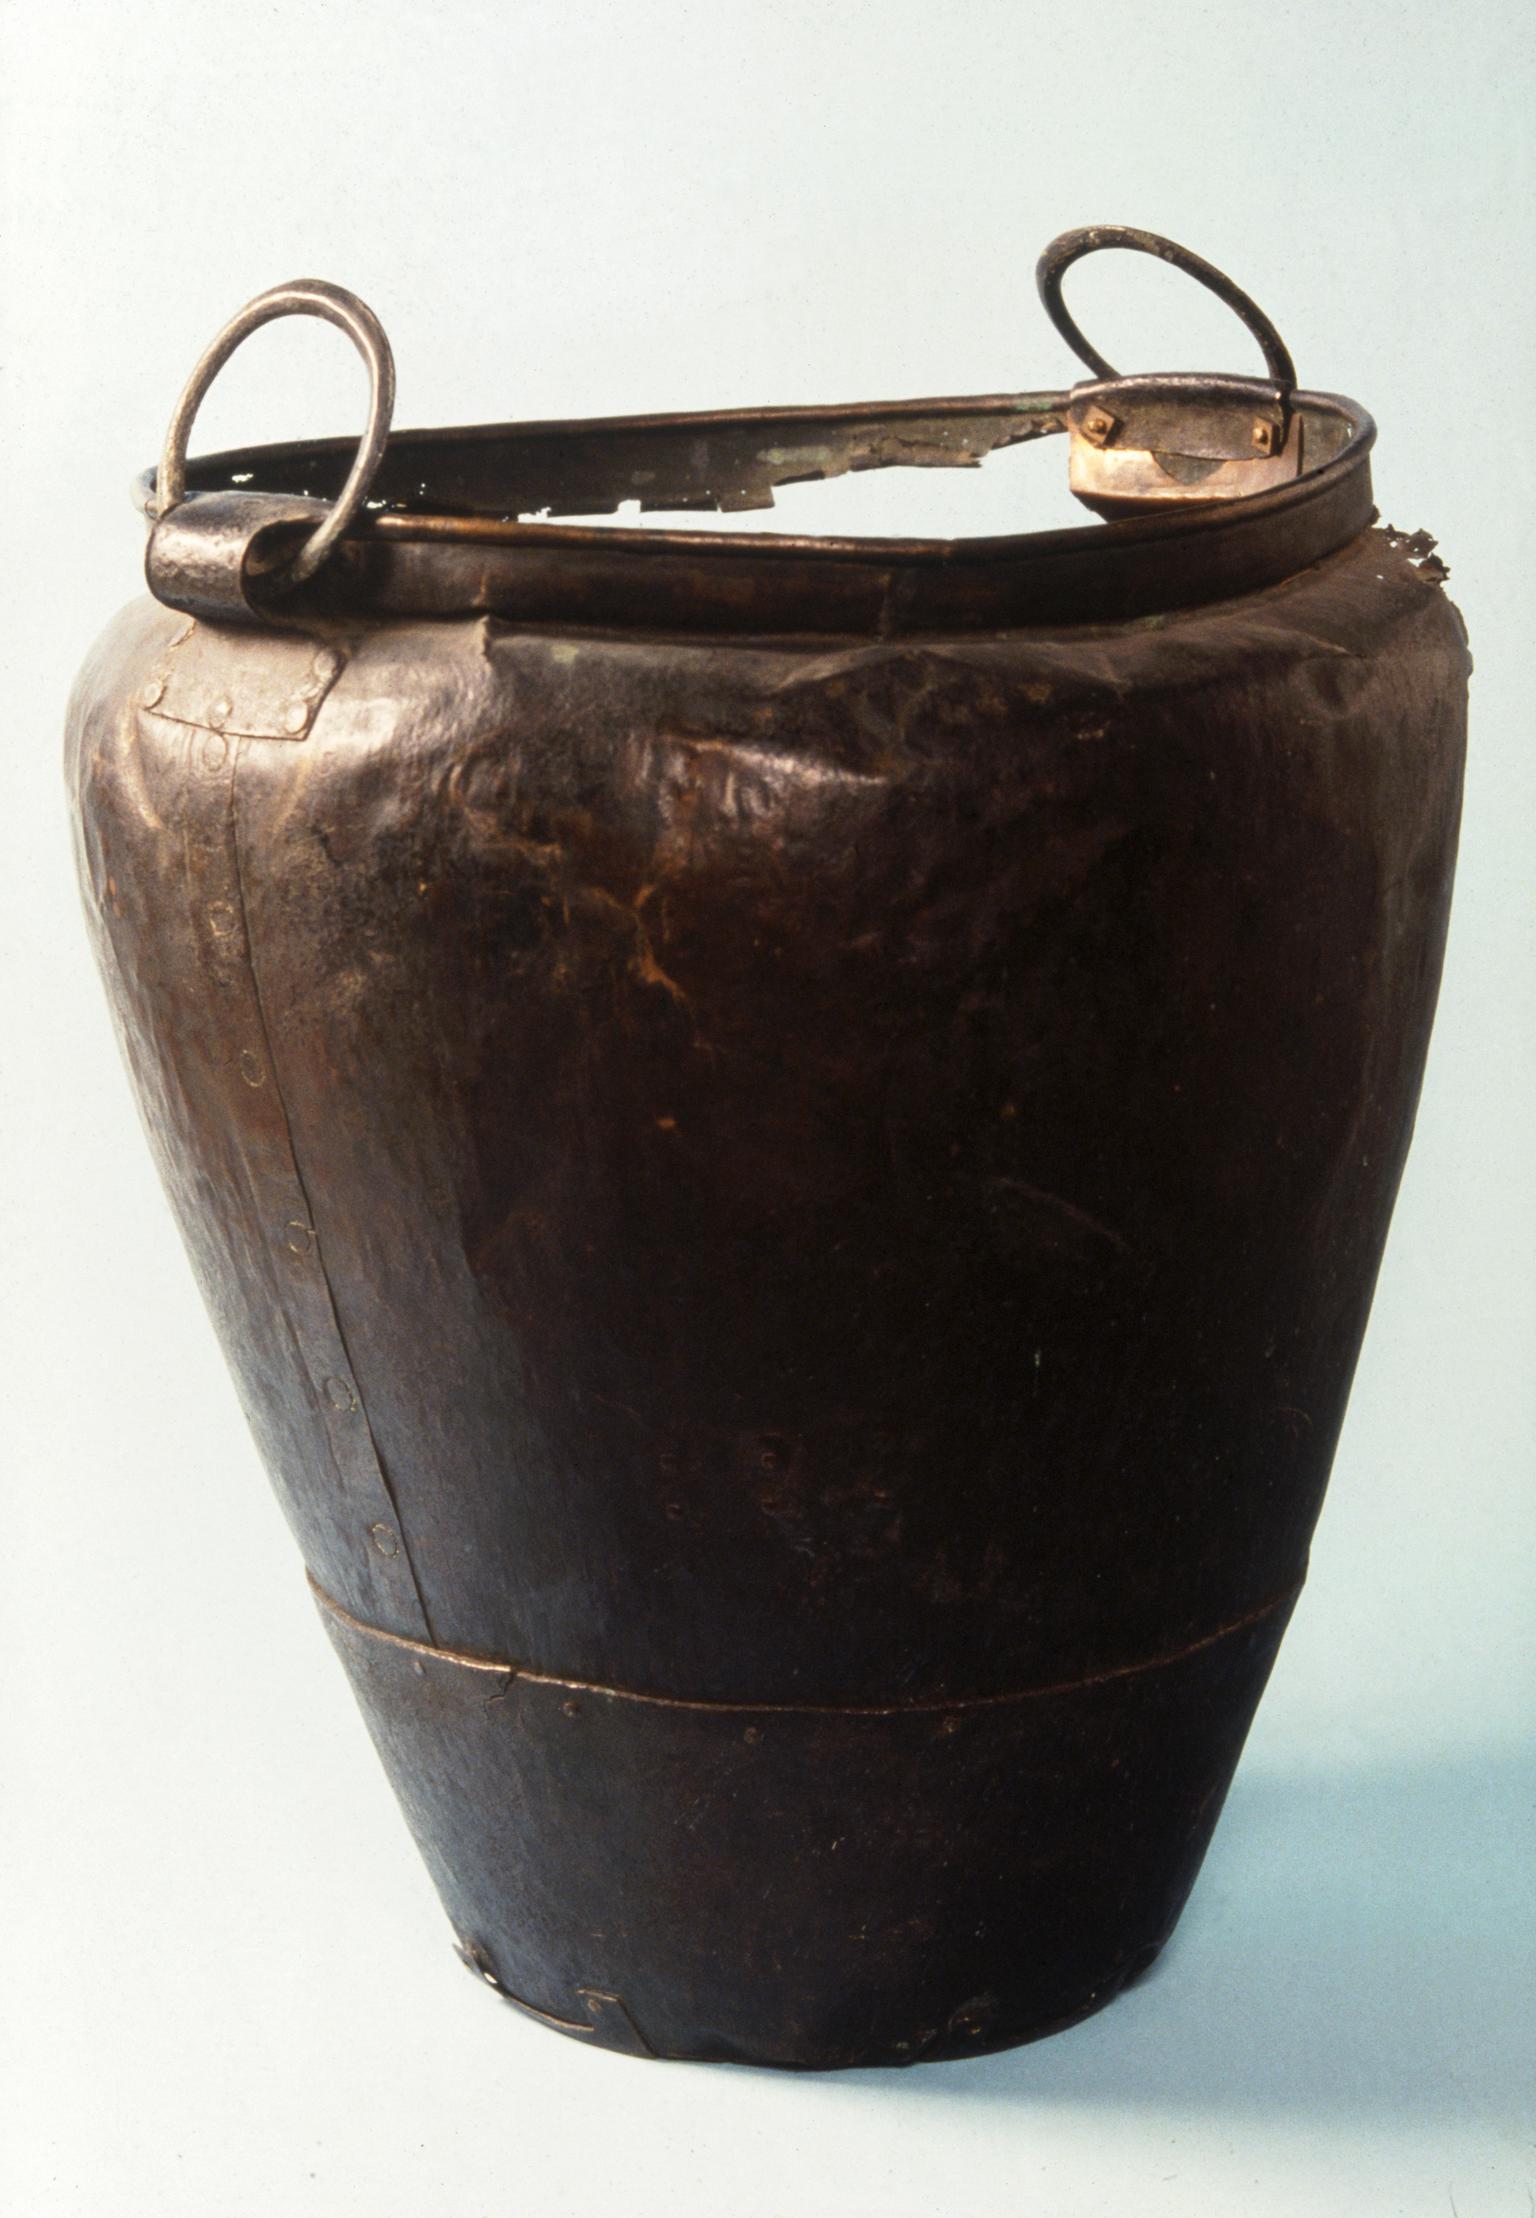 Late Bronze Age bronze bucket